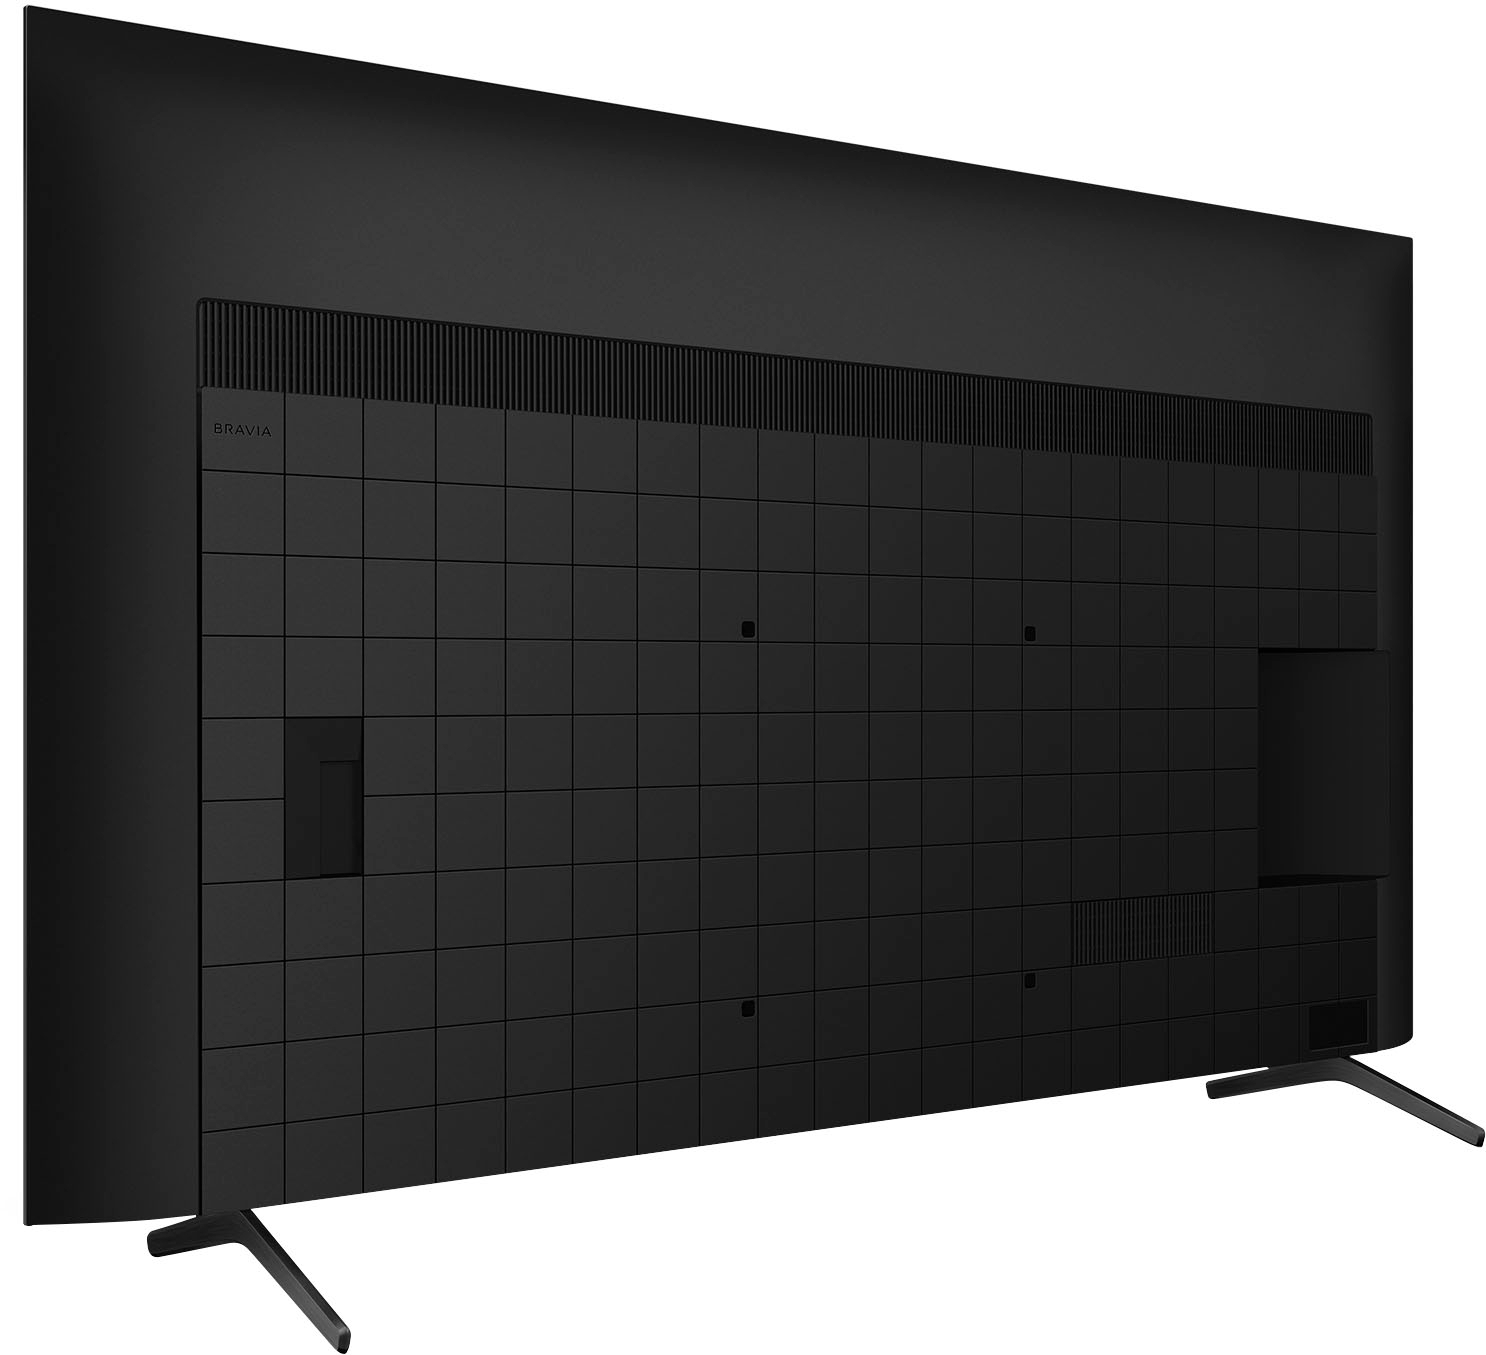 SONY KD-85X80L Televisor Smart TV 85 Direct LED UHD 4K HDR